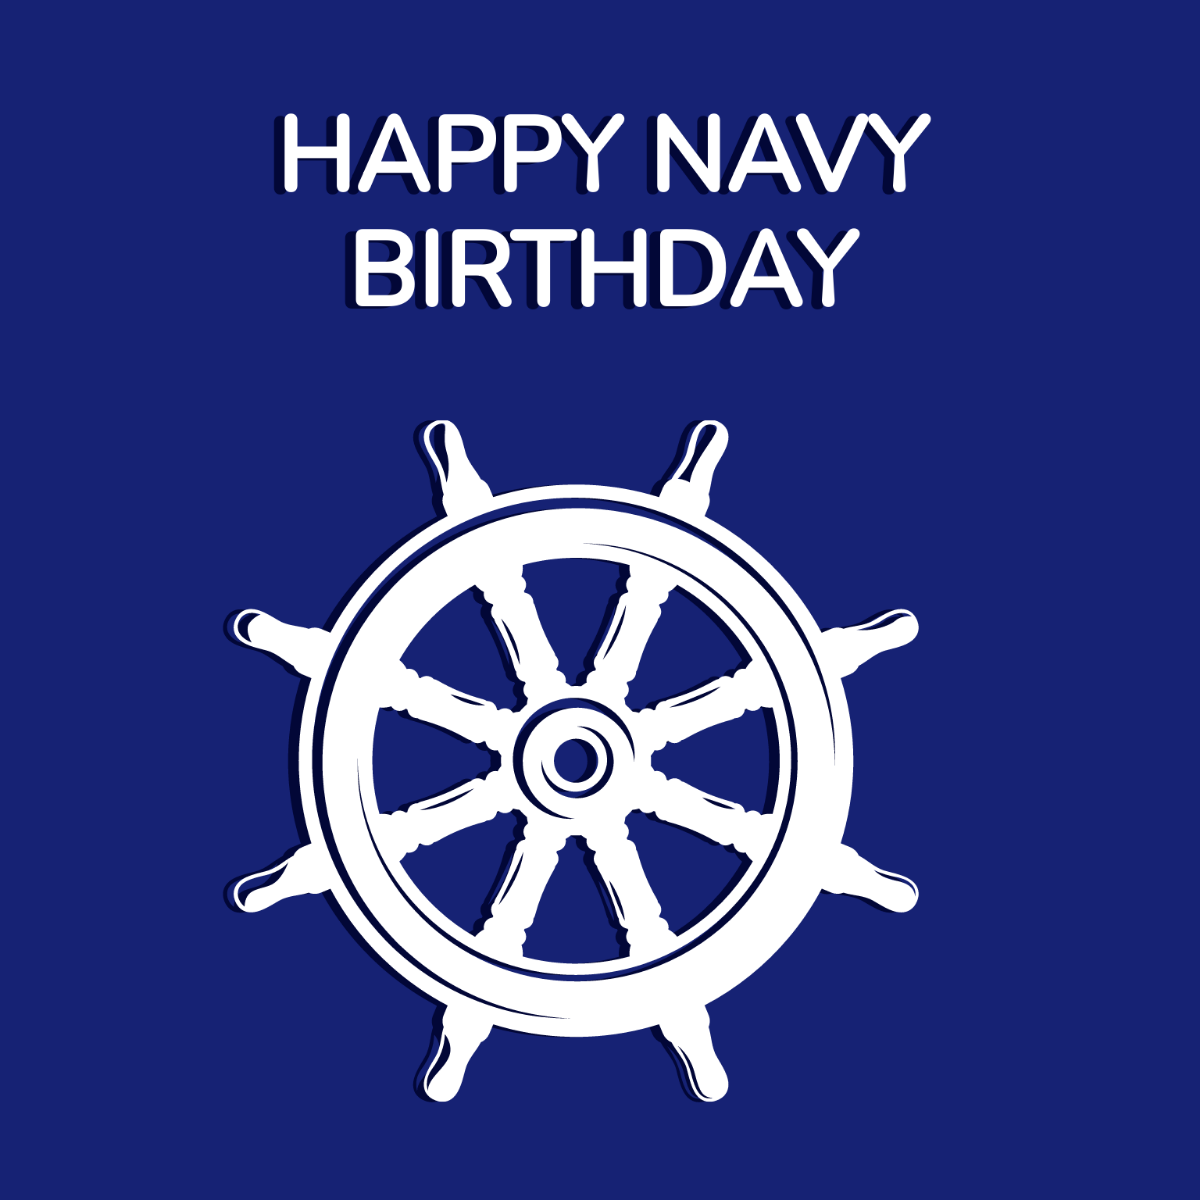 Free Happy Navy Birthday Vector Template